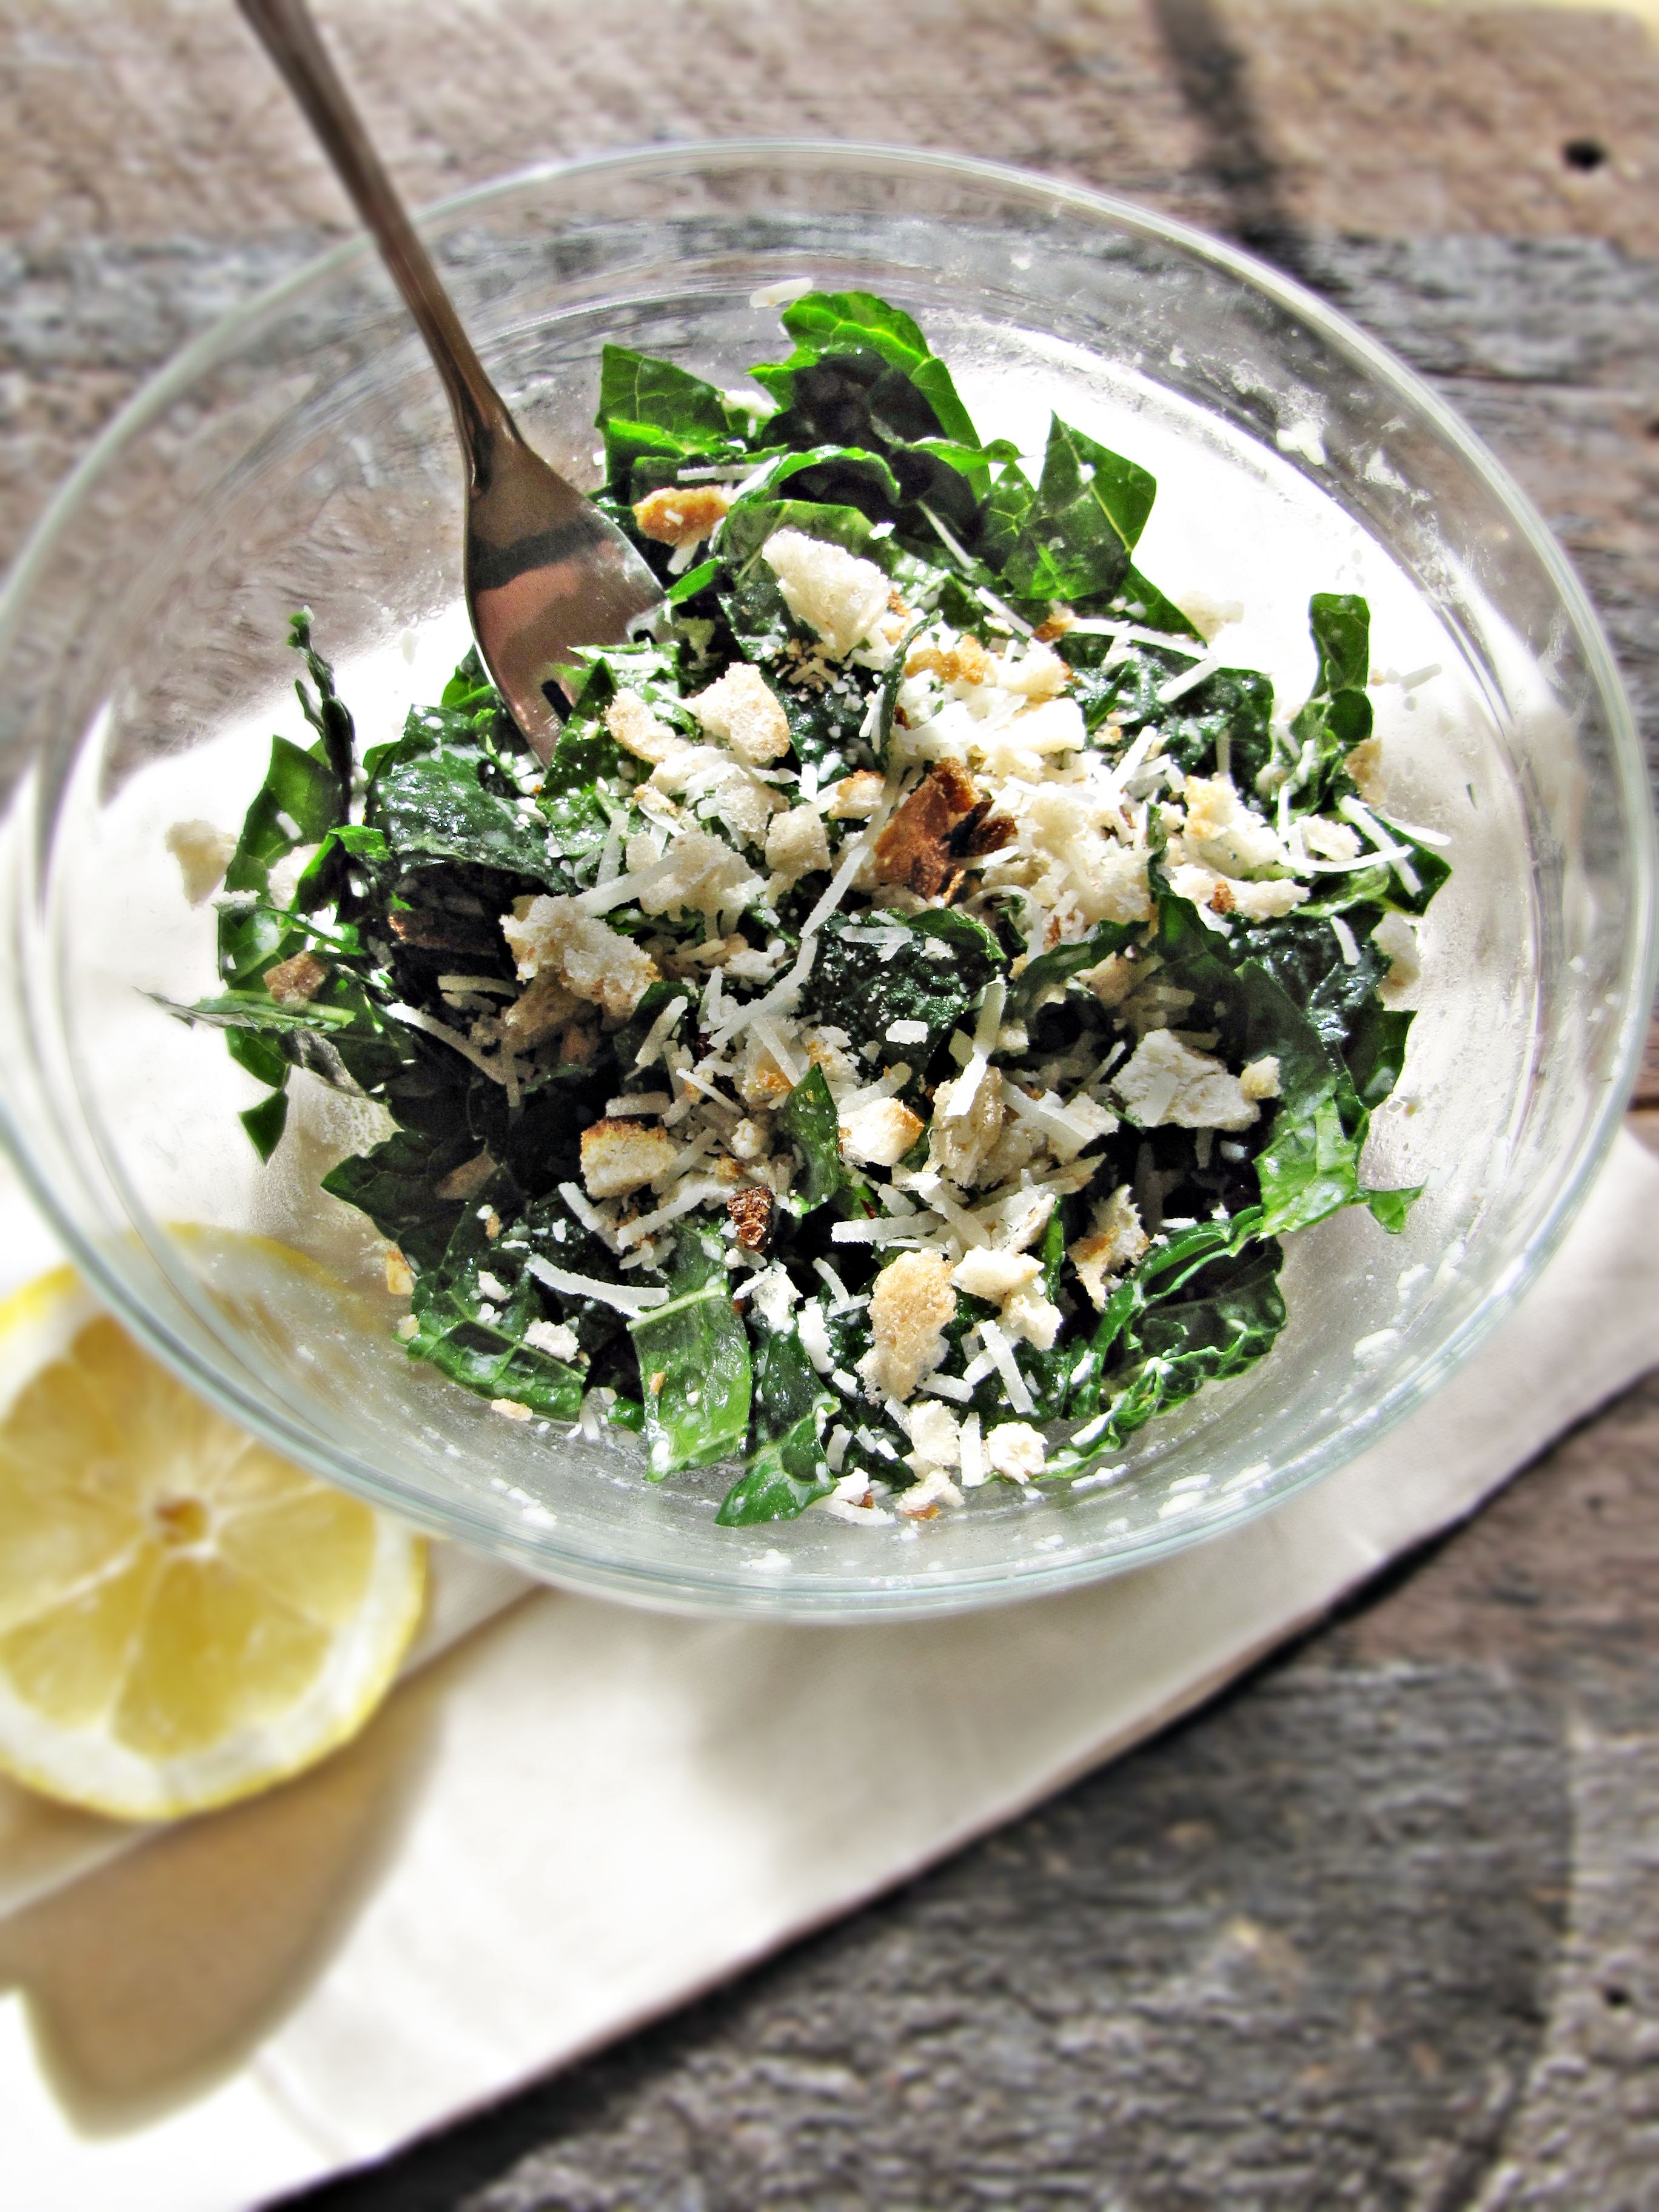 Healthy Winter Recipes - Kale and Pecorino Salad